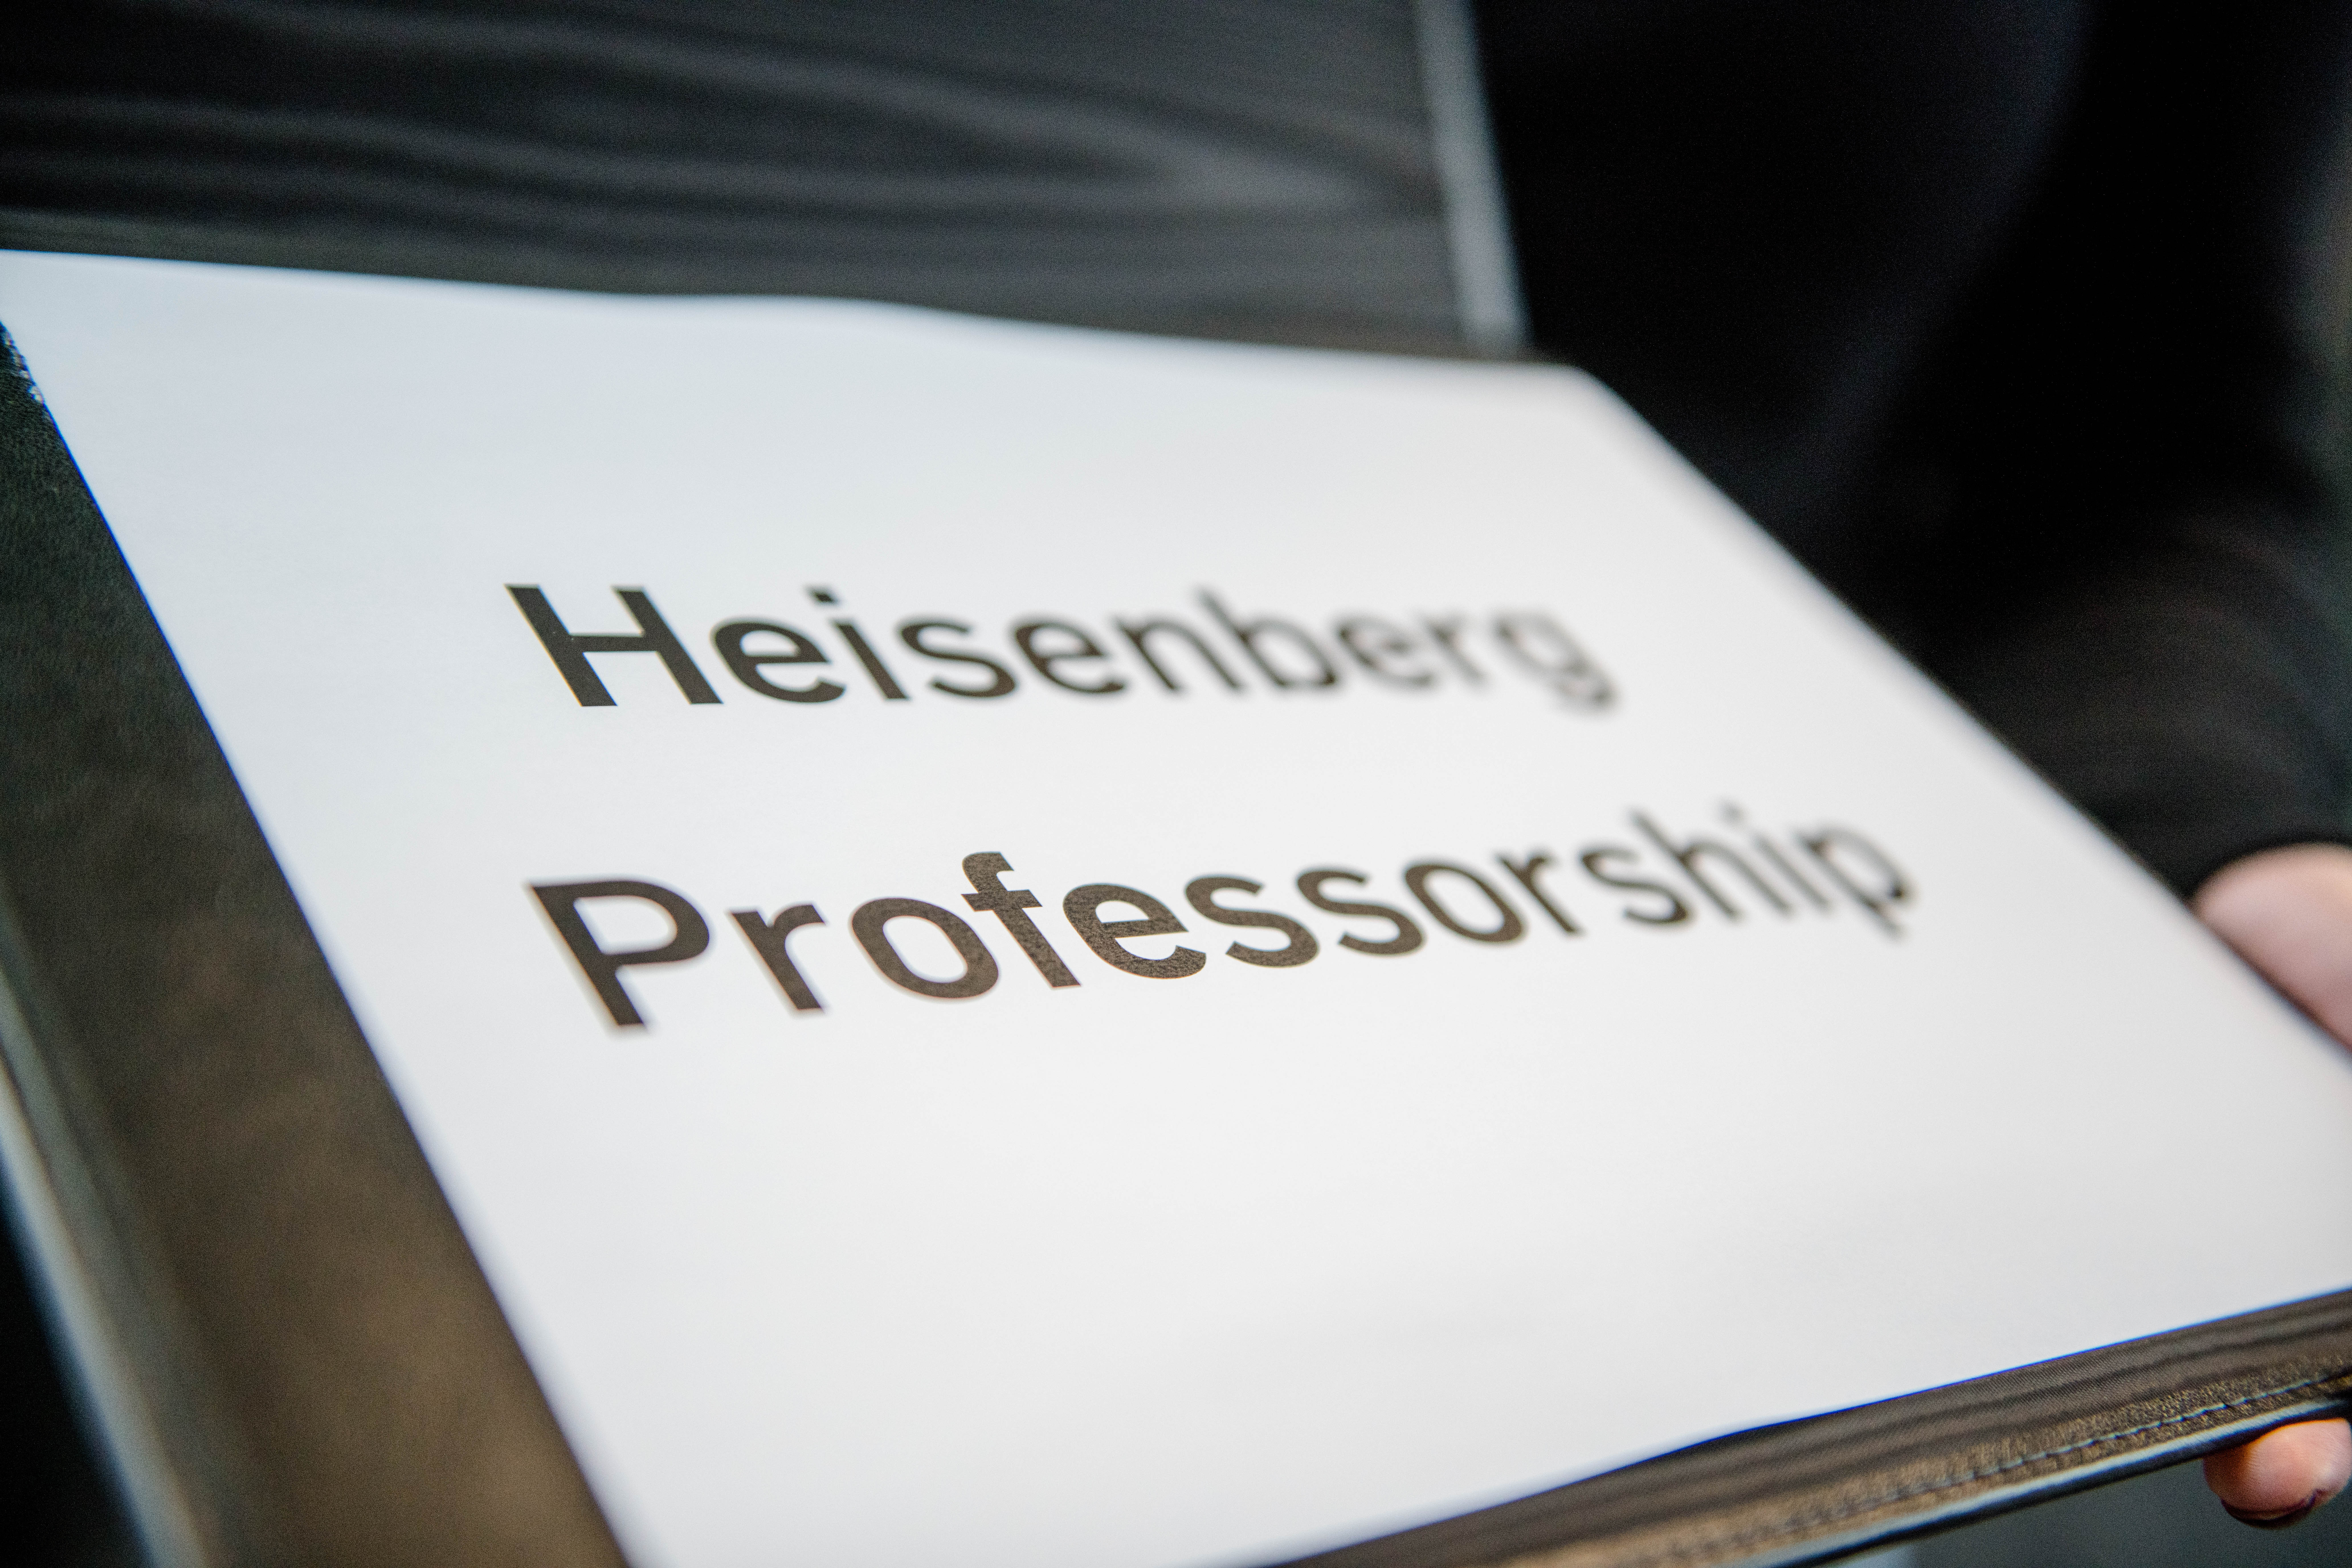 A folder with the inscription Heisenberg Professorship